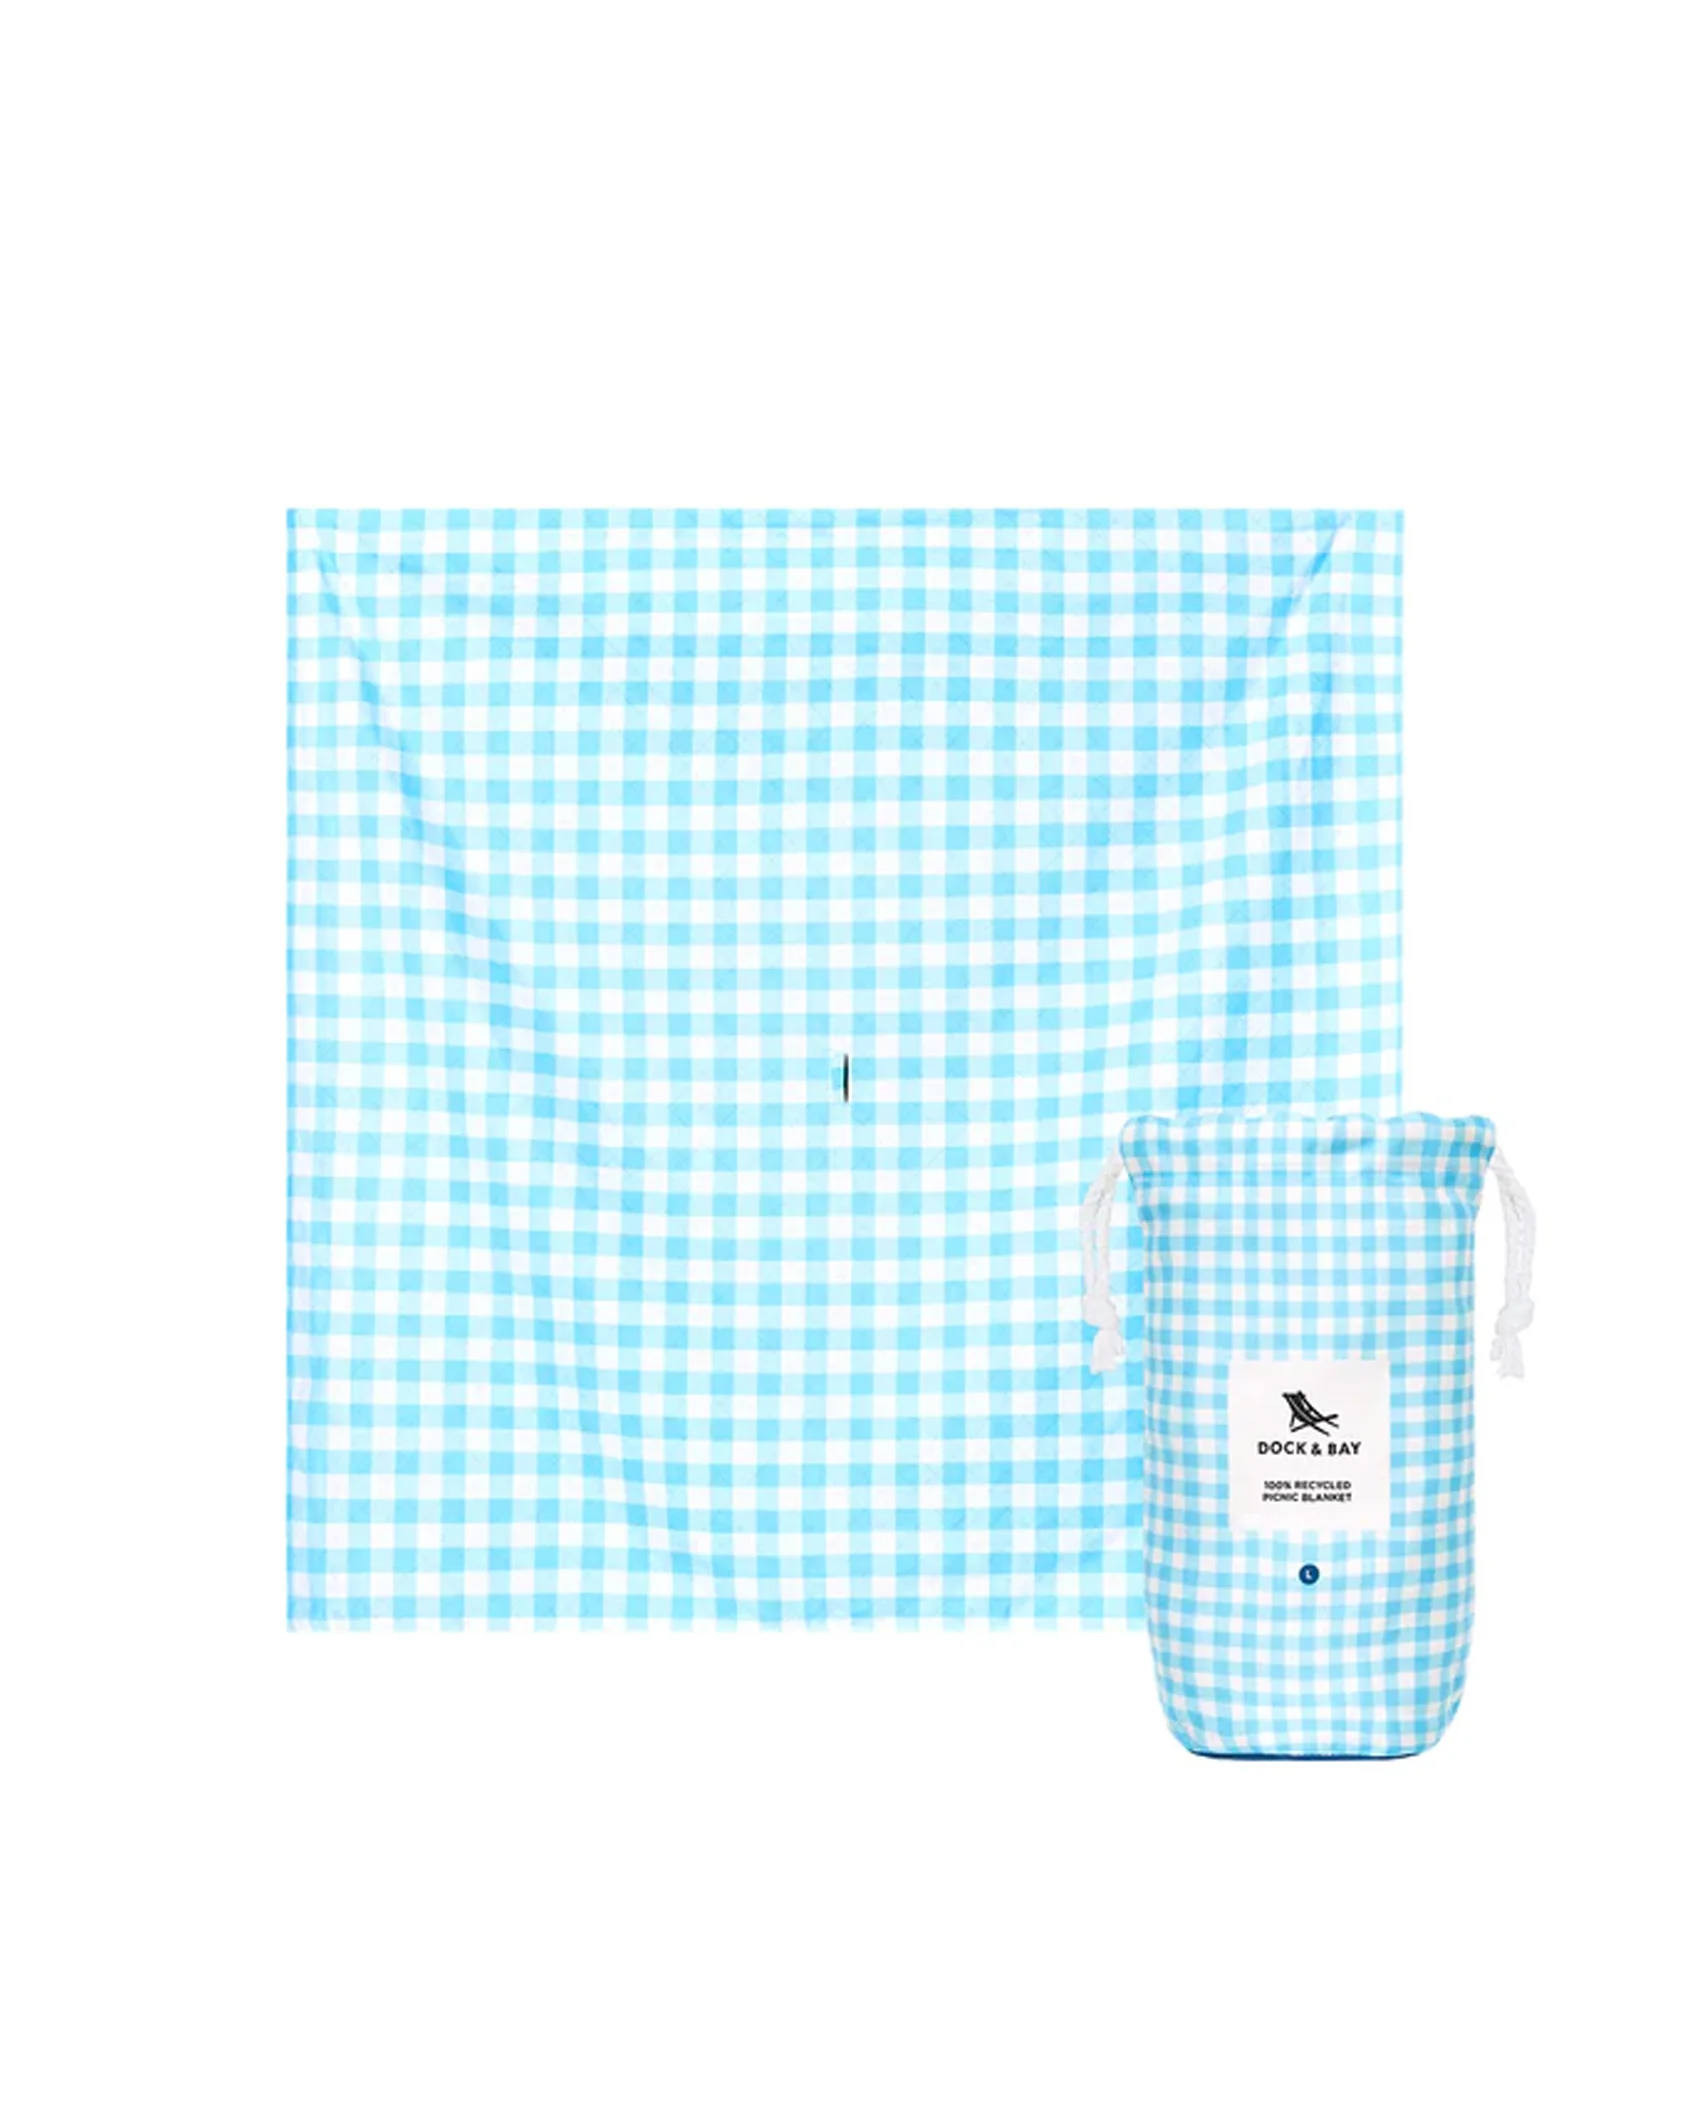 Dock & Bay Picnic Blanket - Blueberry Pie / X Large (240 x 170cm)